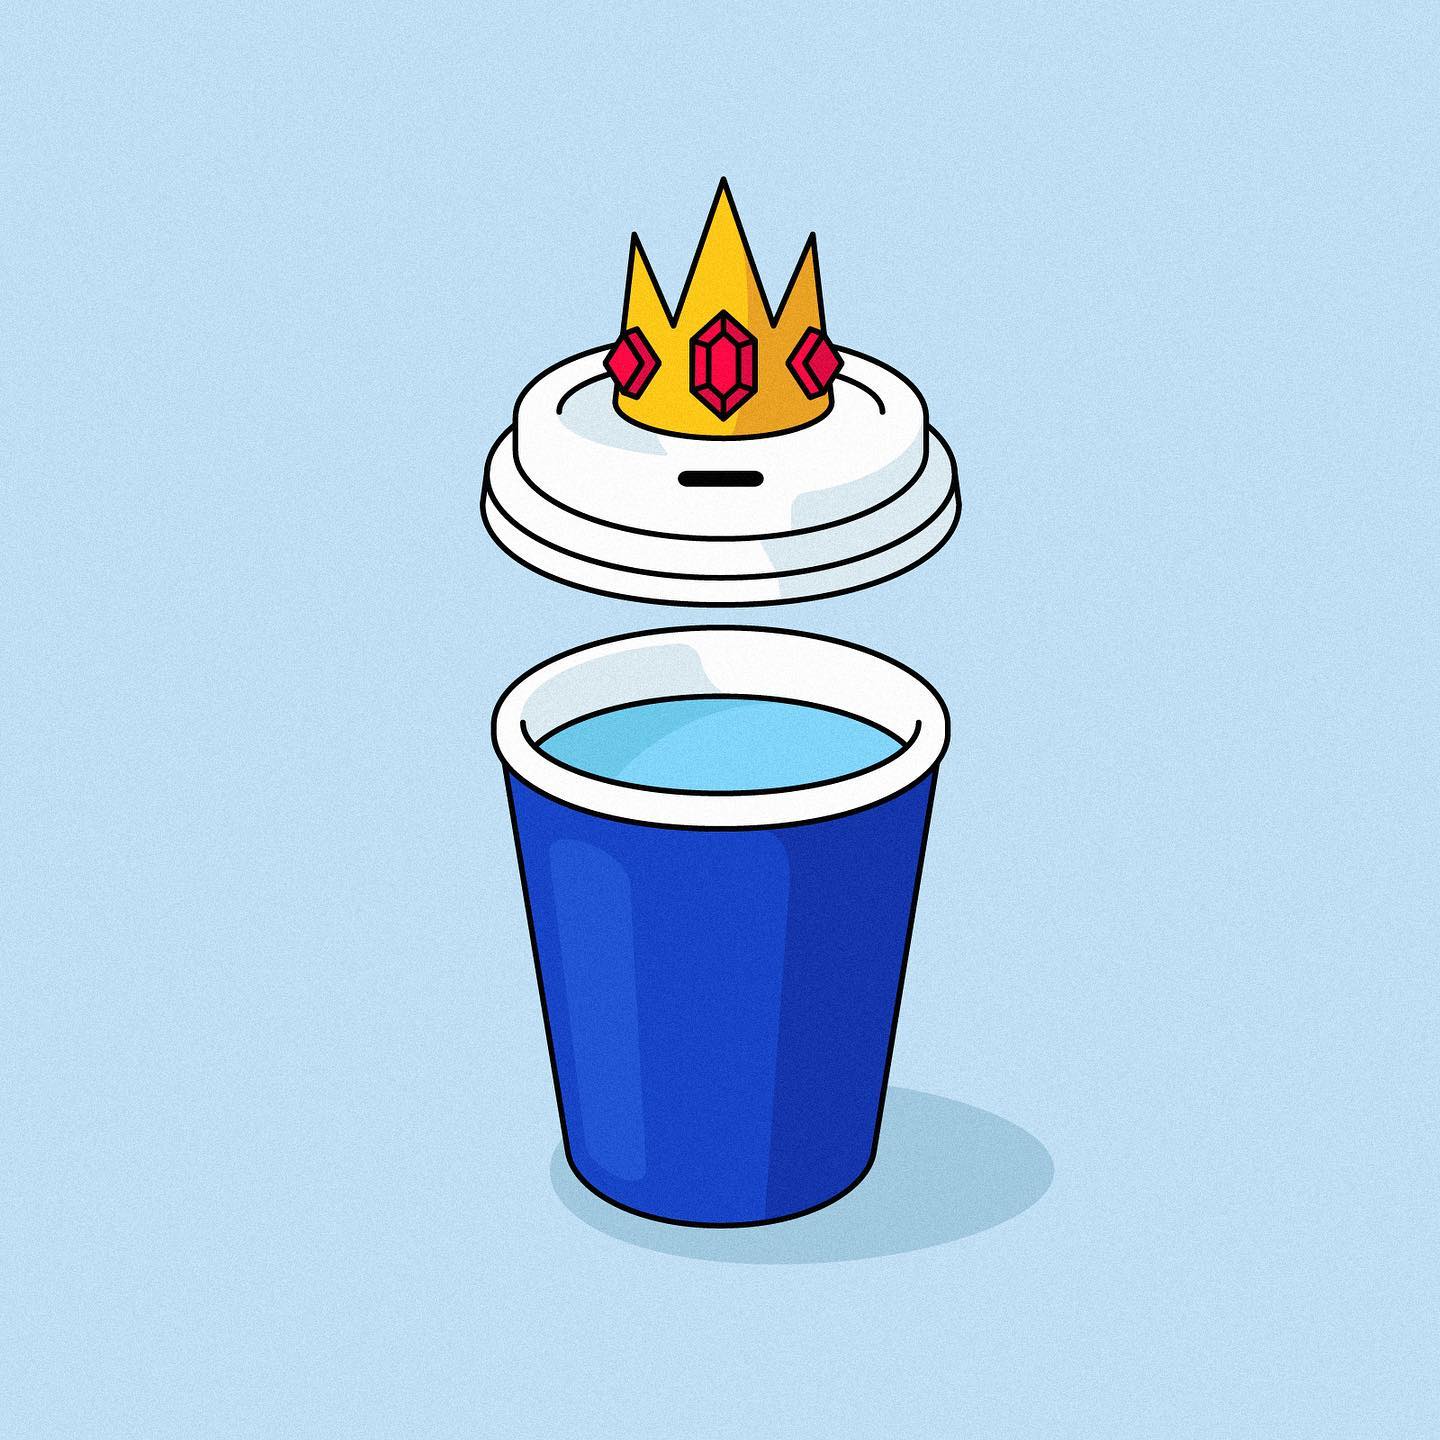 General 1440x1440 Adventure Time cartoon drink cup Ice King minimalism digital art simple background